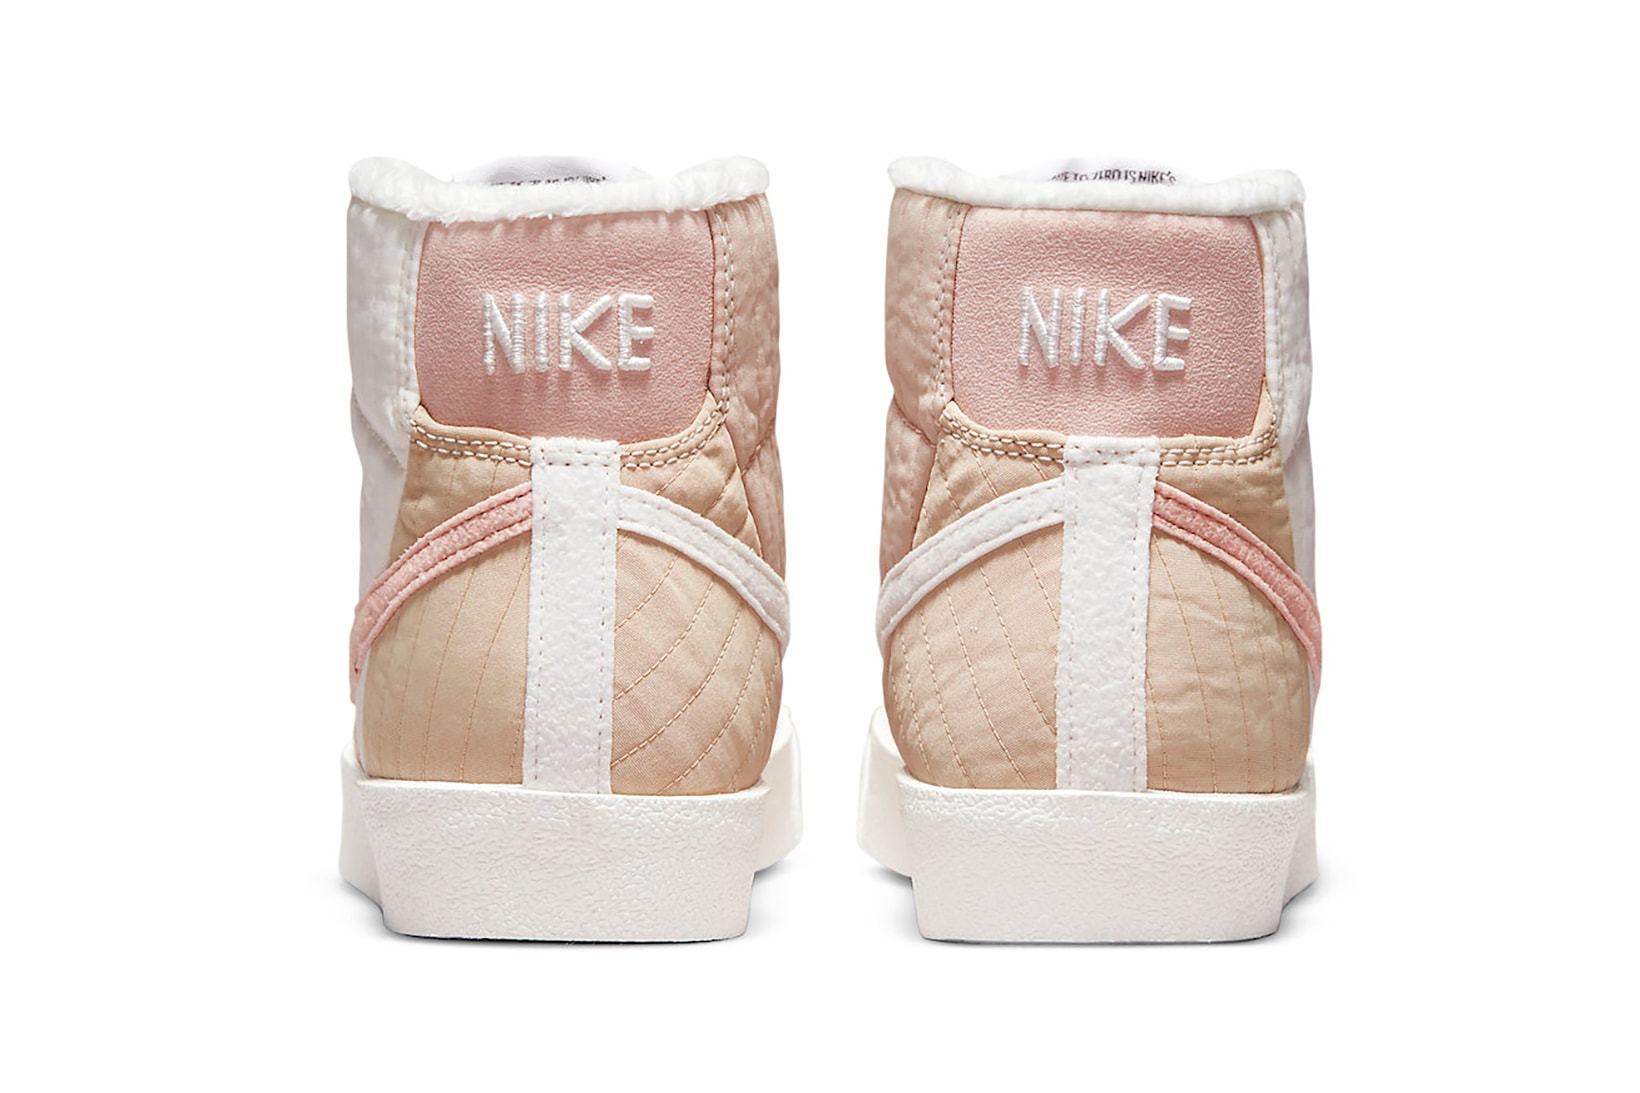 Nike Blazer Mid Toasty Pink White Womens Sneakers Kicks Shoes Footwear Shoes Heel